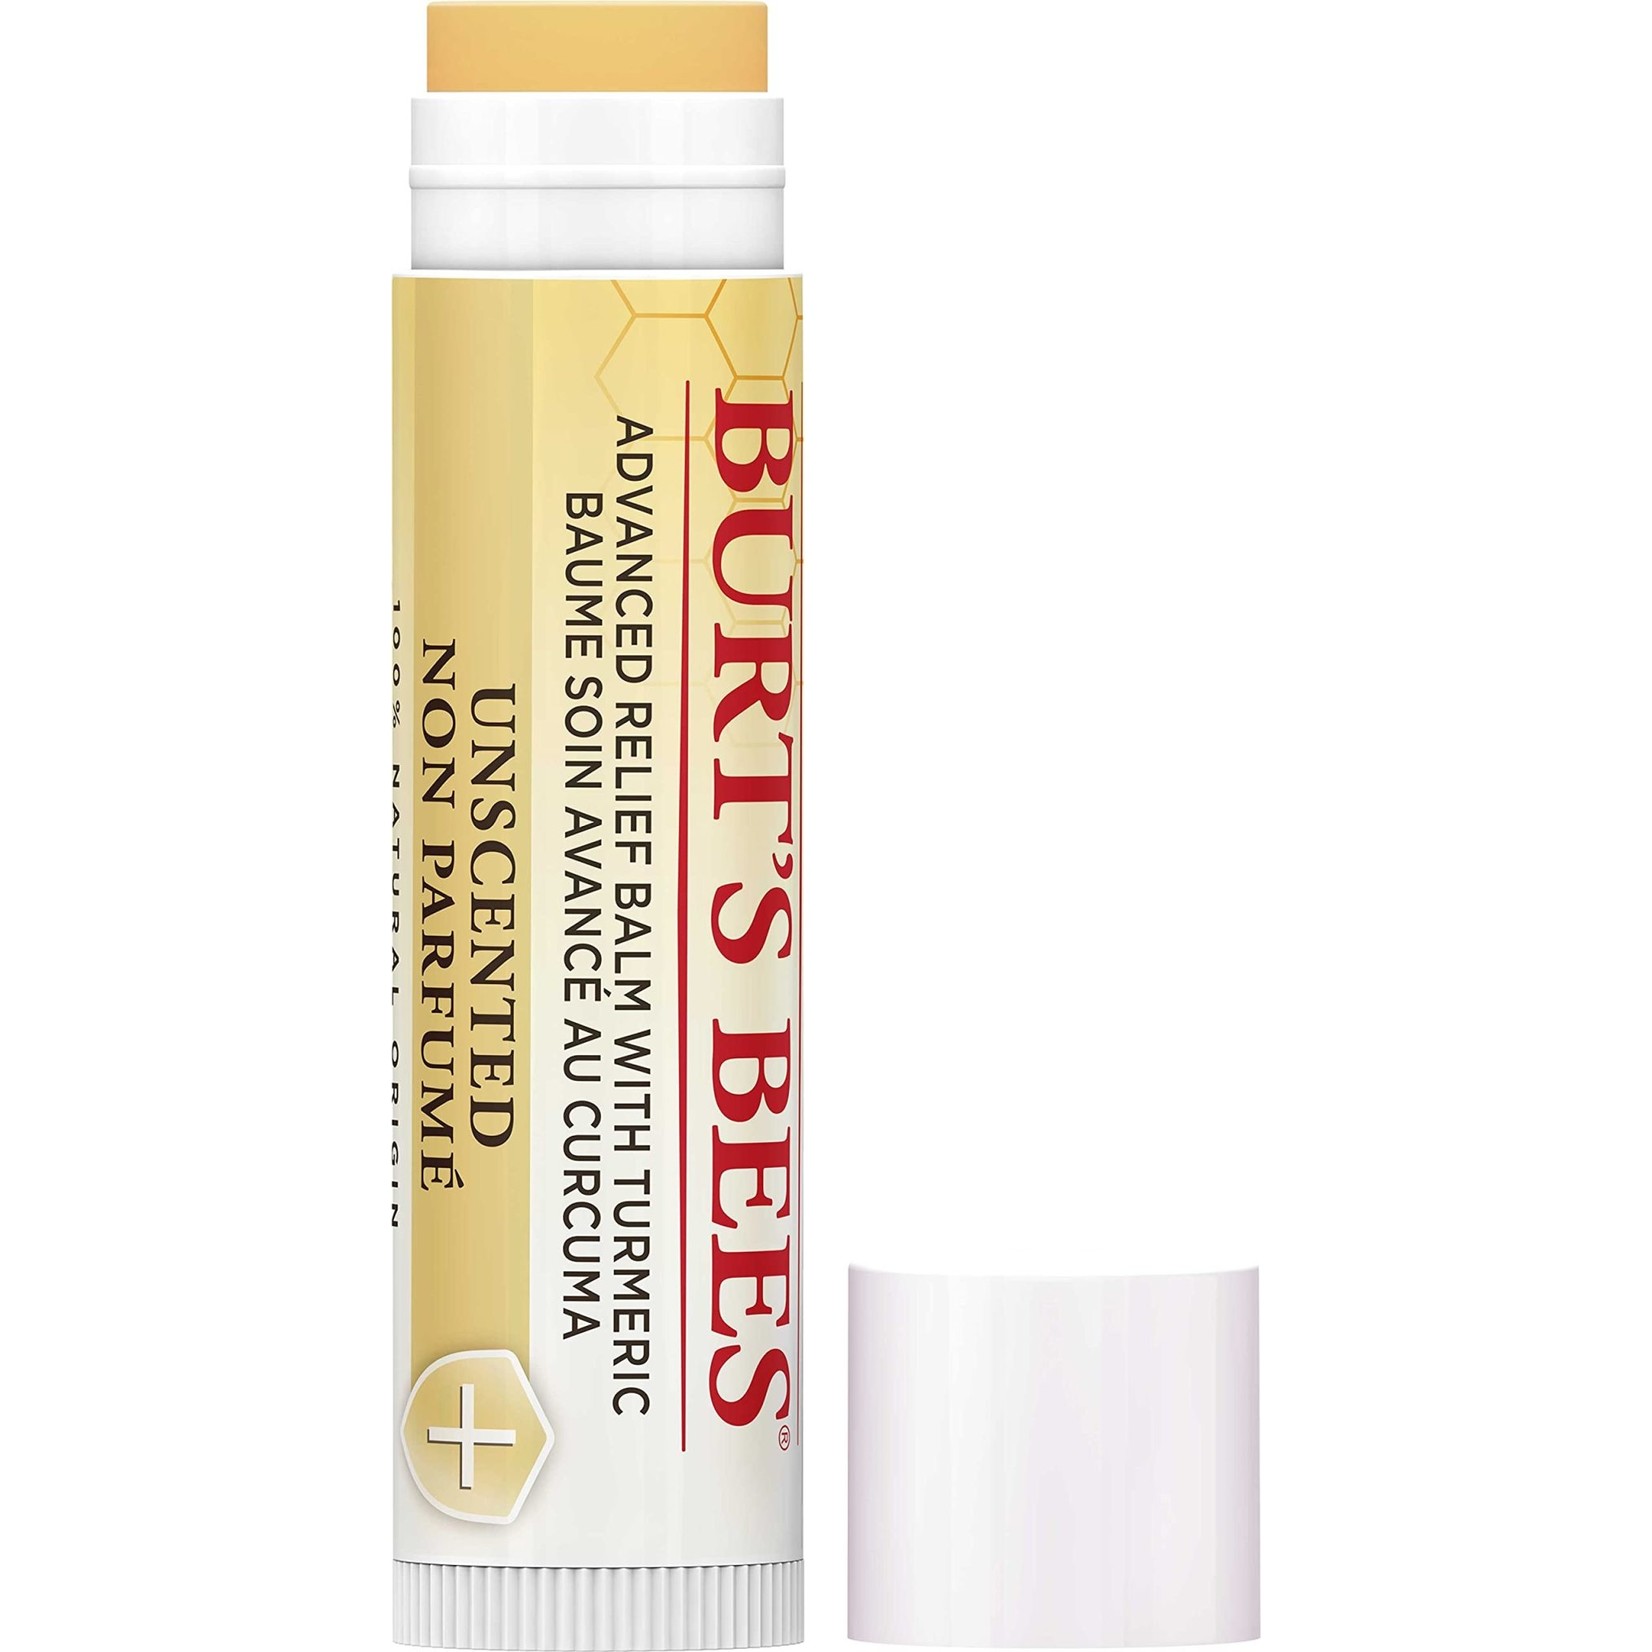 Burt's Bee Burt's Bees Natural Lip Balm Advanced Relief Unscented